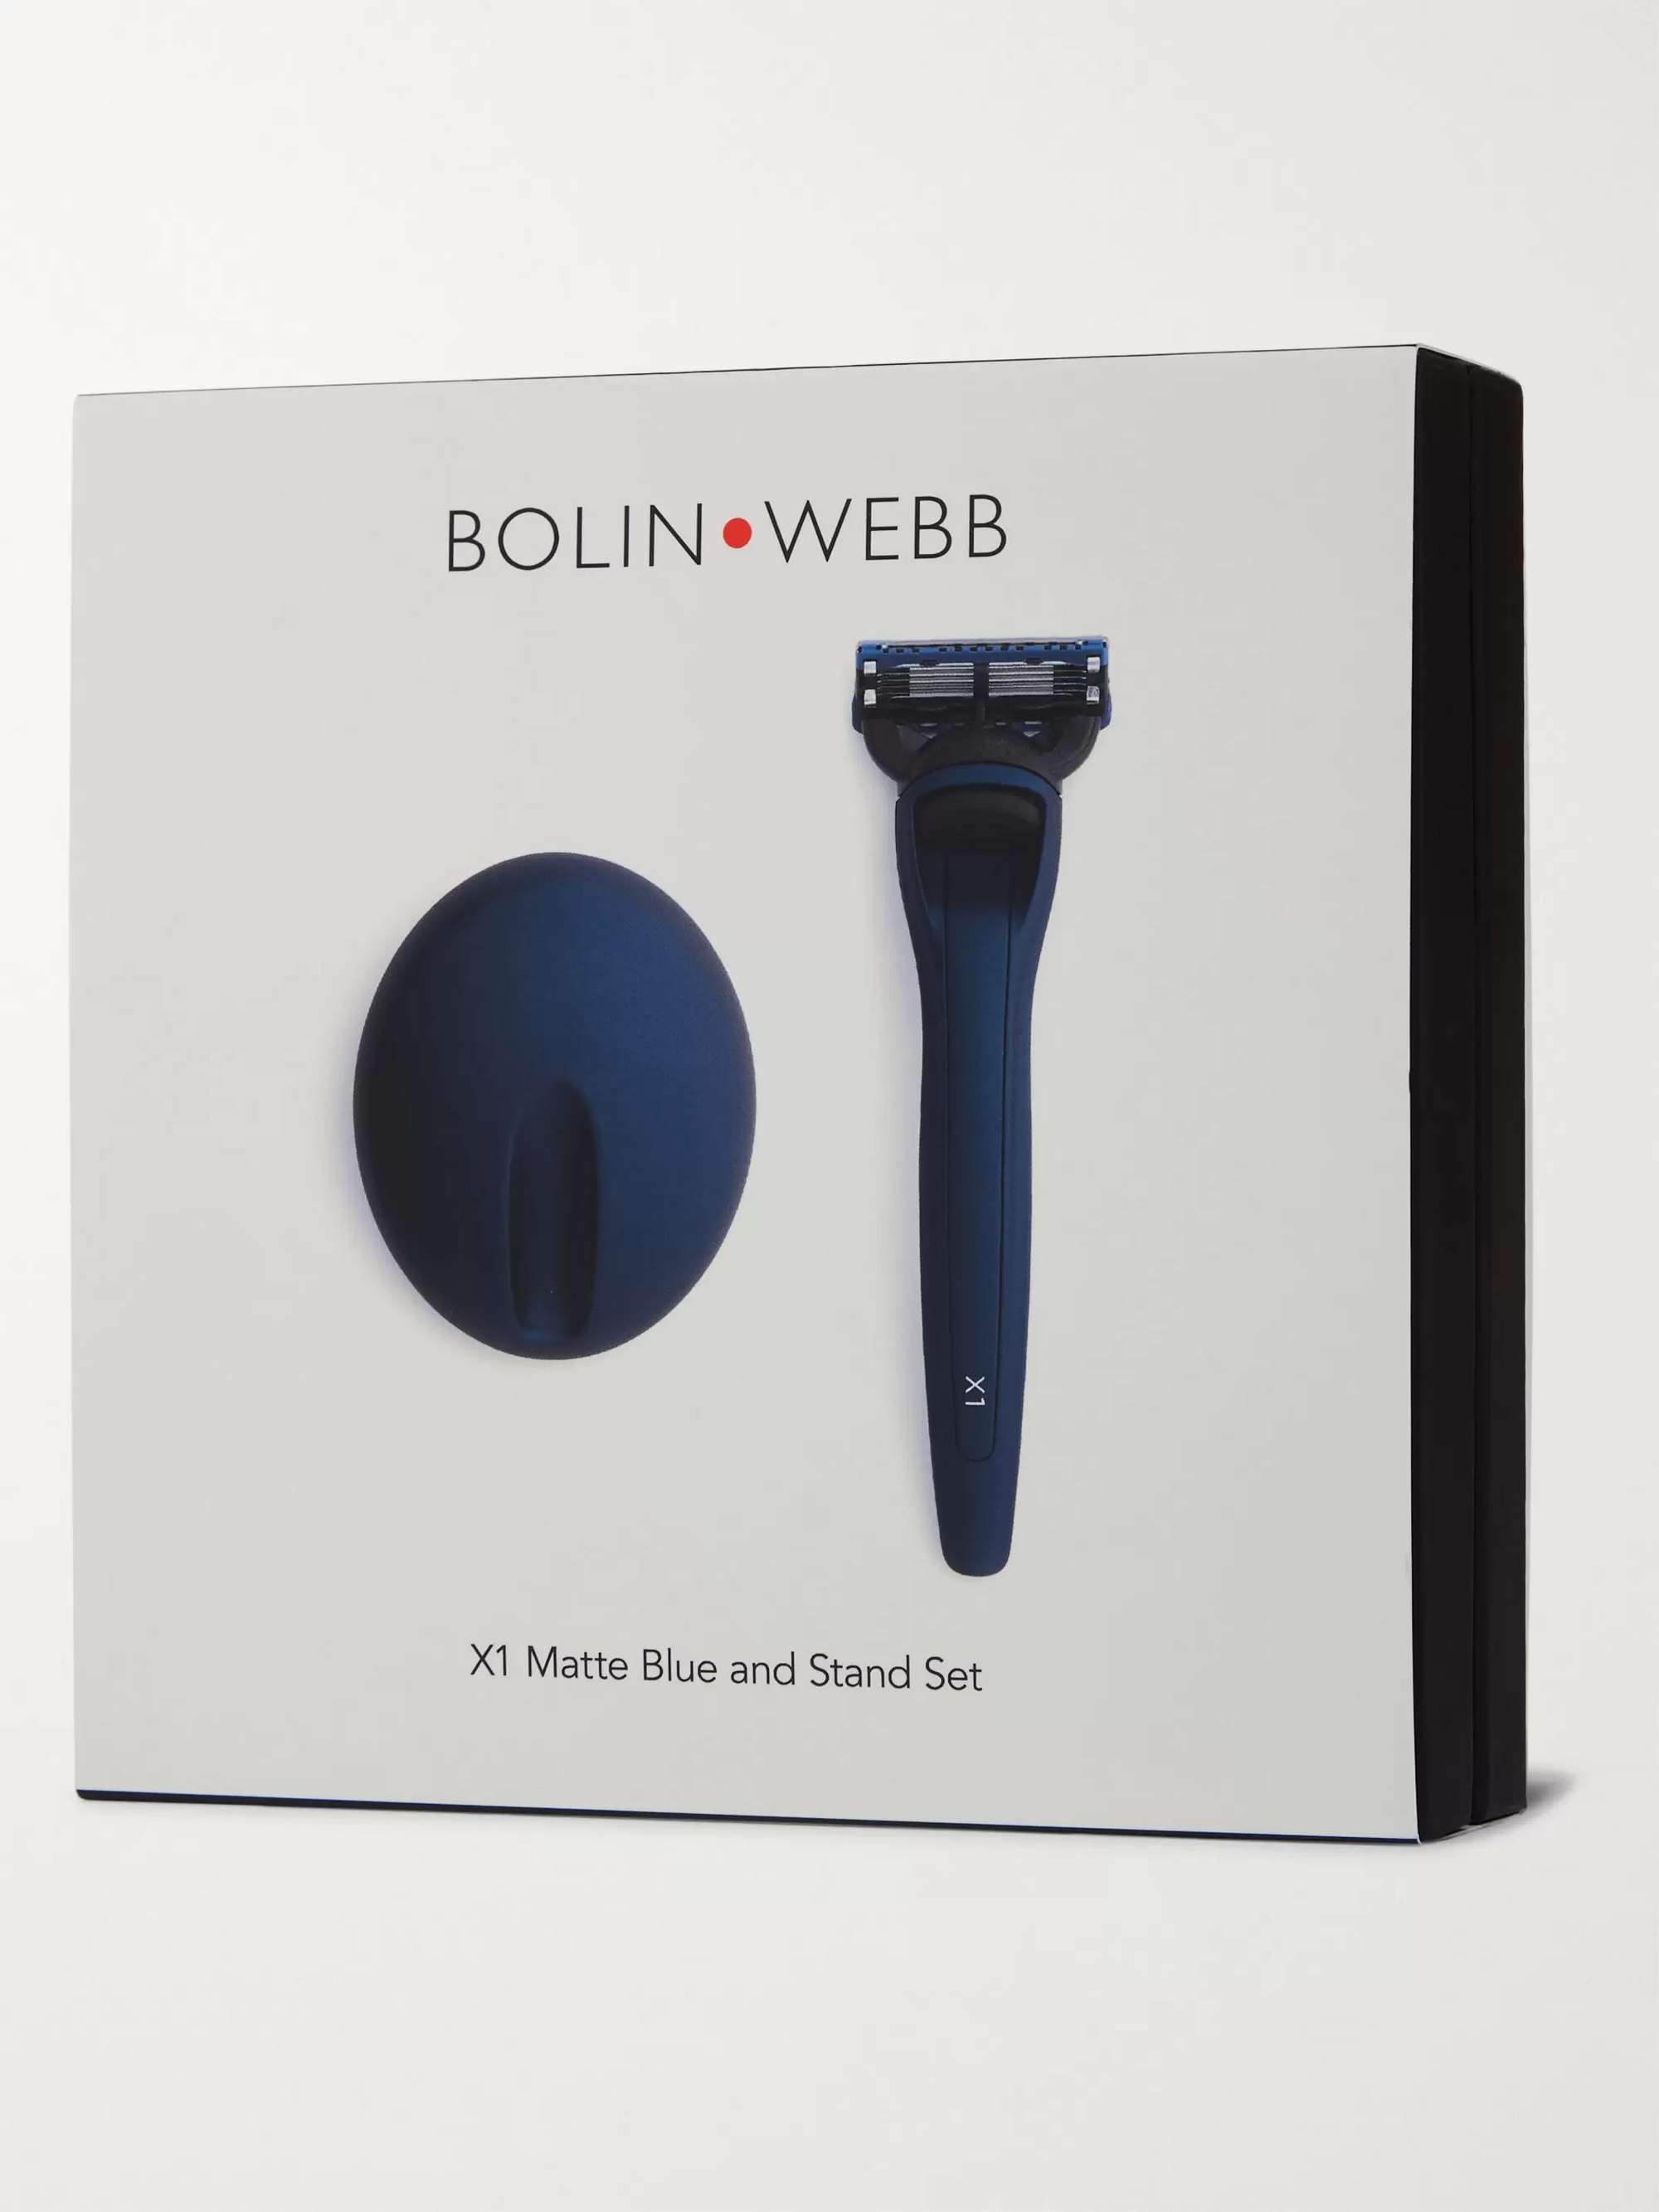 BOLIN WEBB X1 Razor and Stand Shaving Set